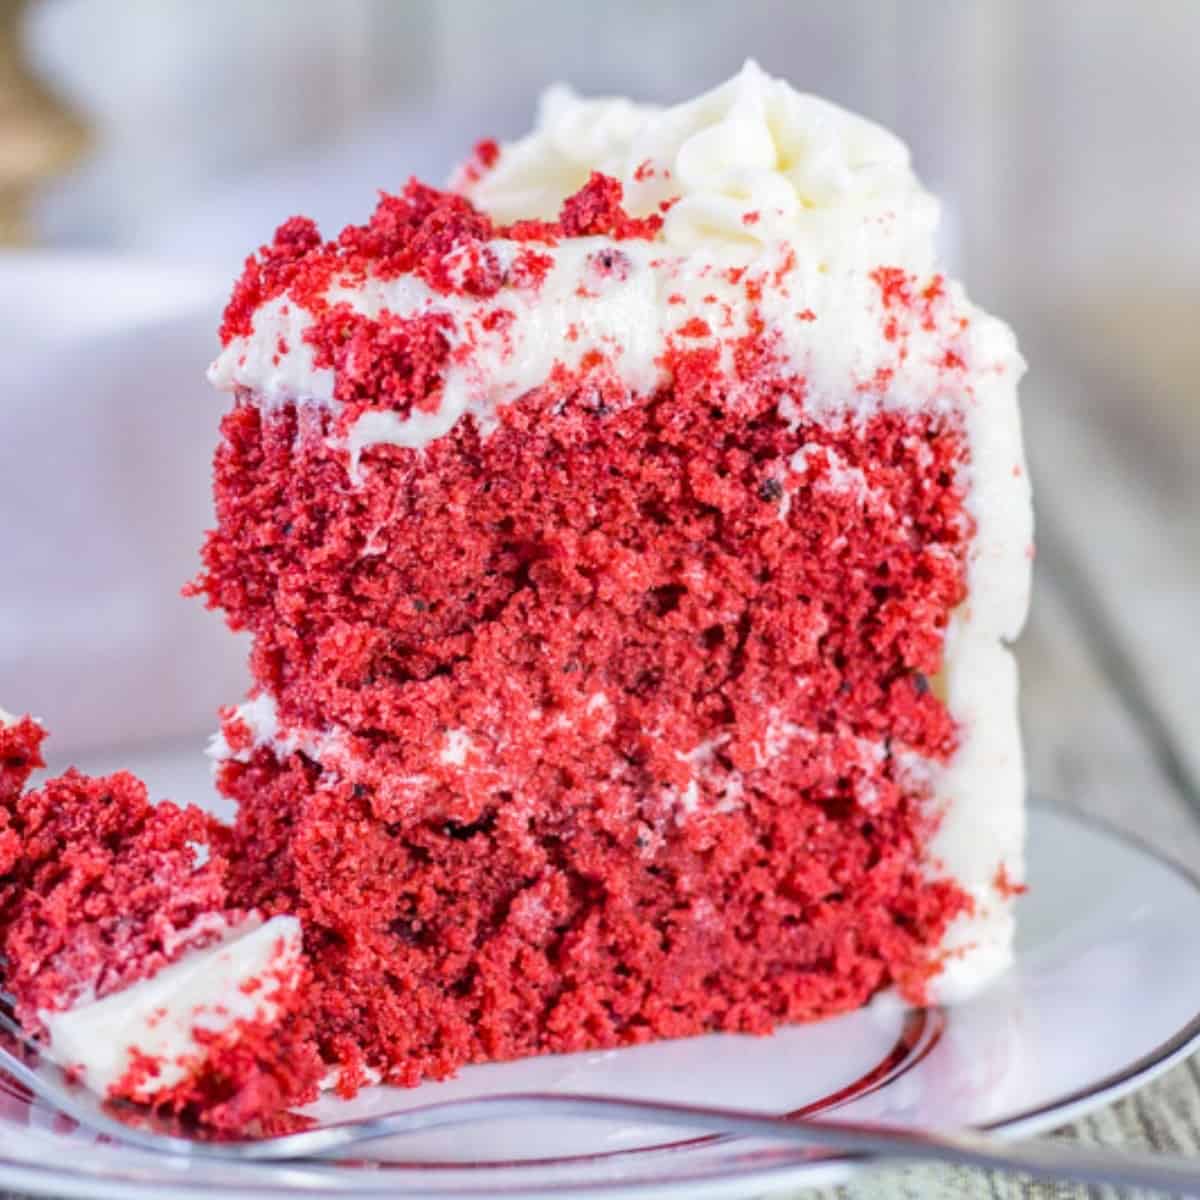 52 red velvet cake featured image